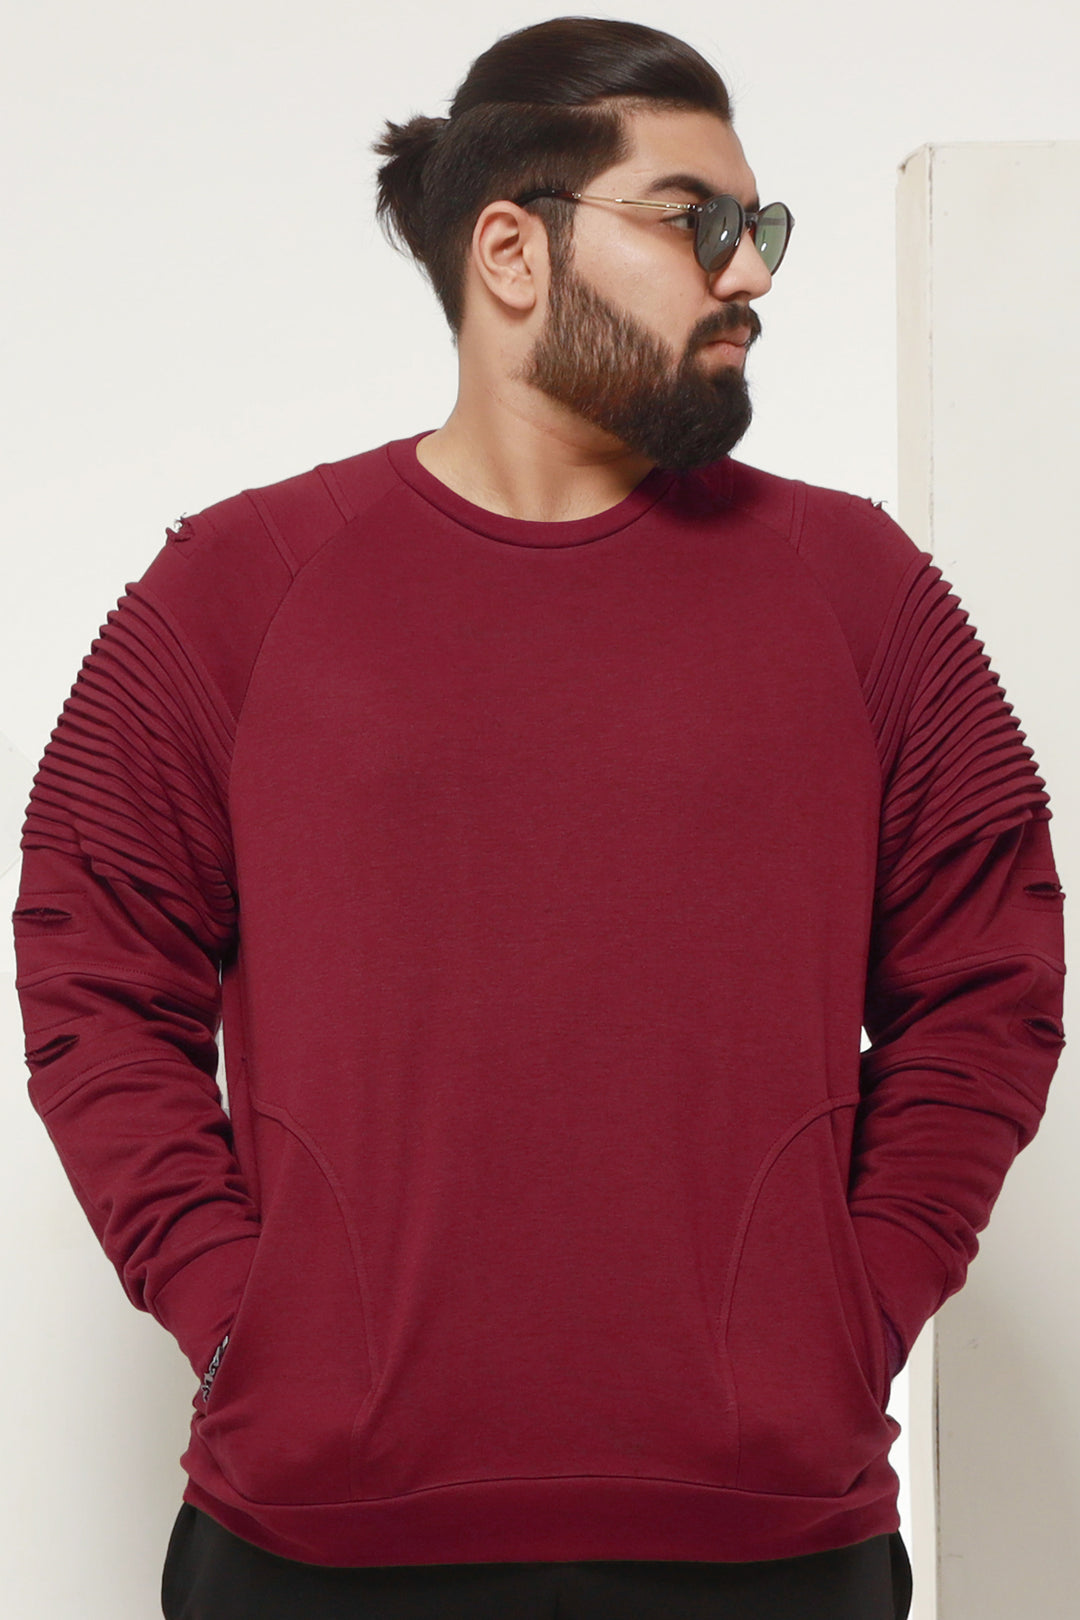 Maroon Pleated Raglan Sweatshirt Men Plus Size Sweatshirt in Pakistan 